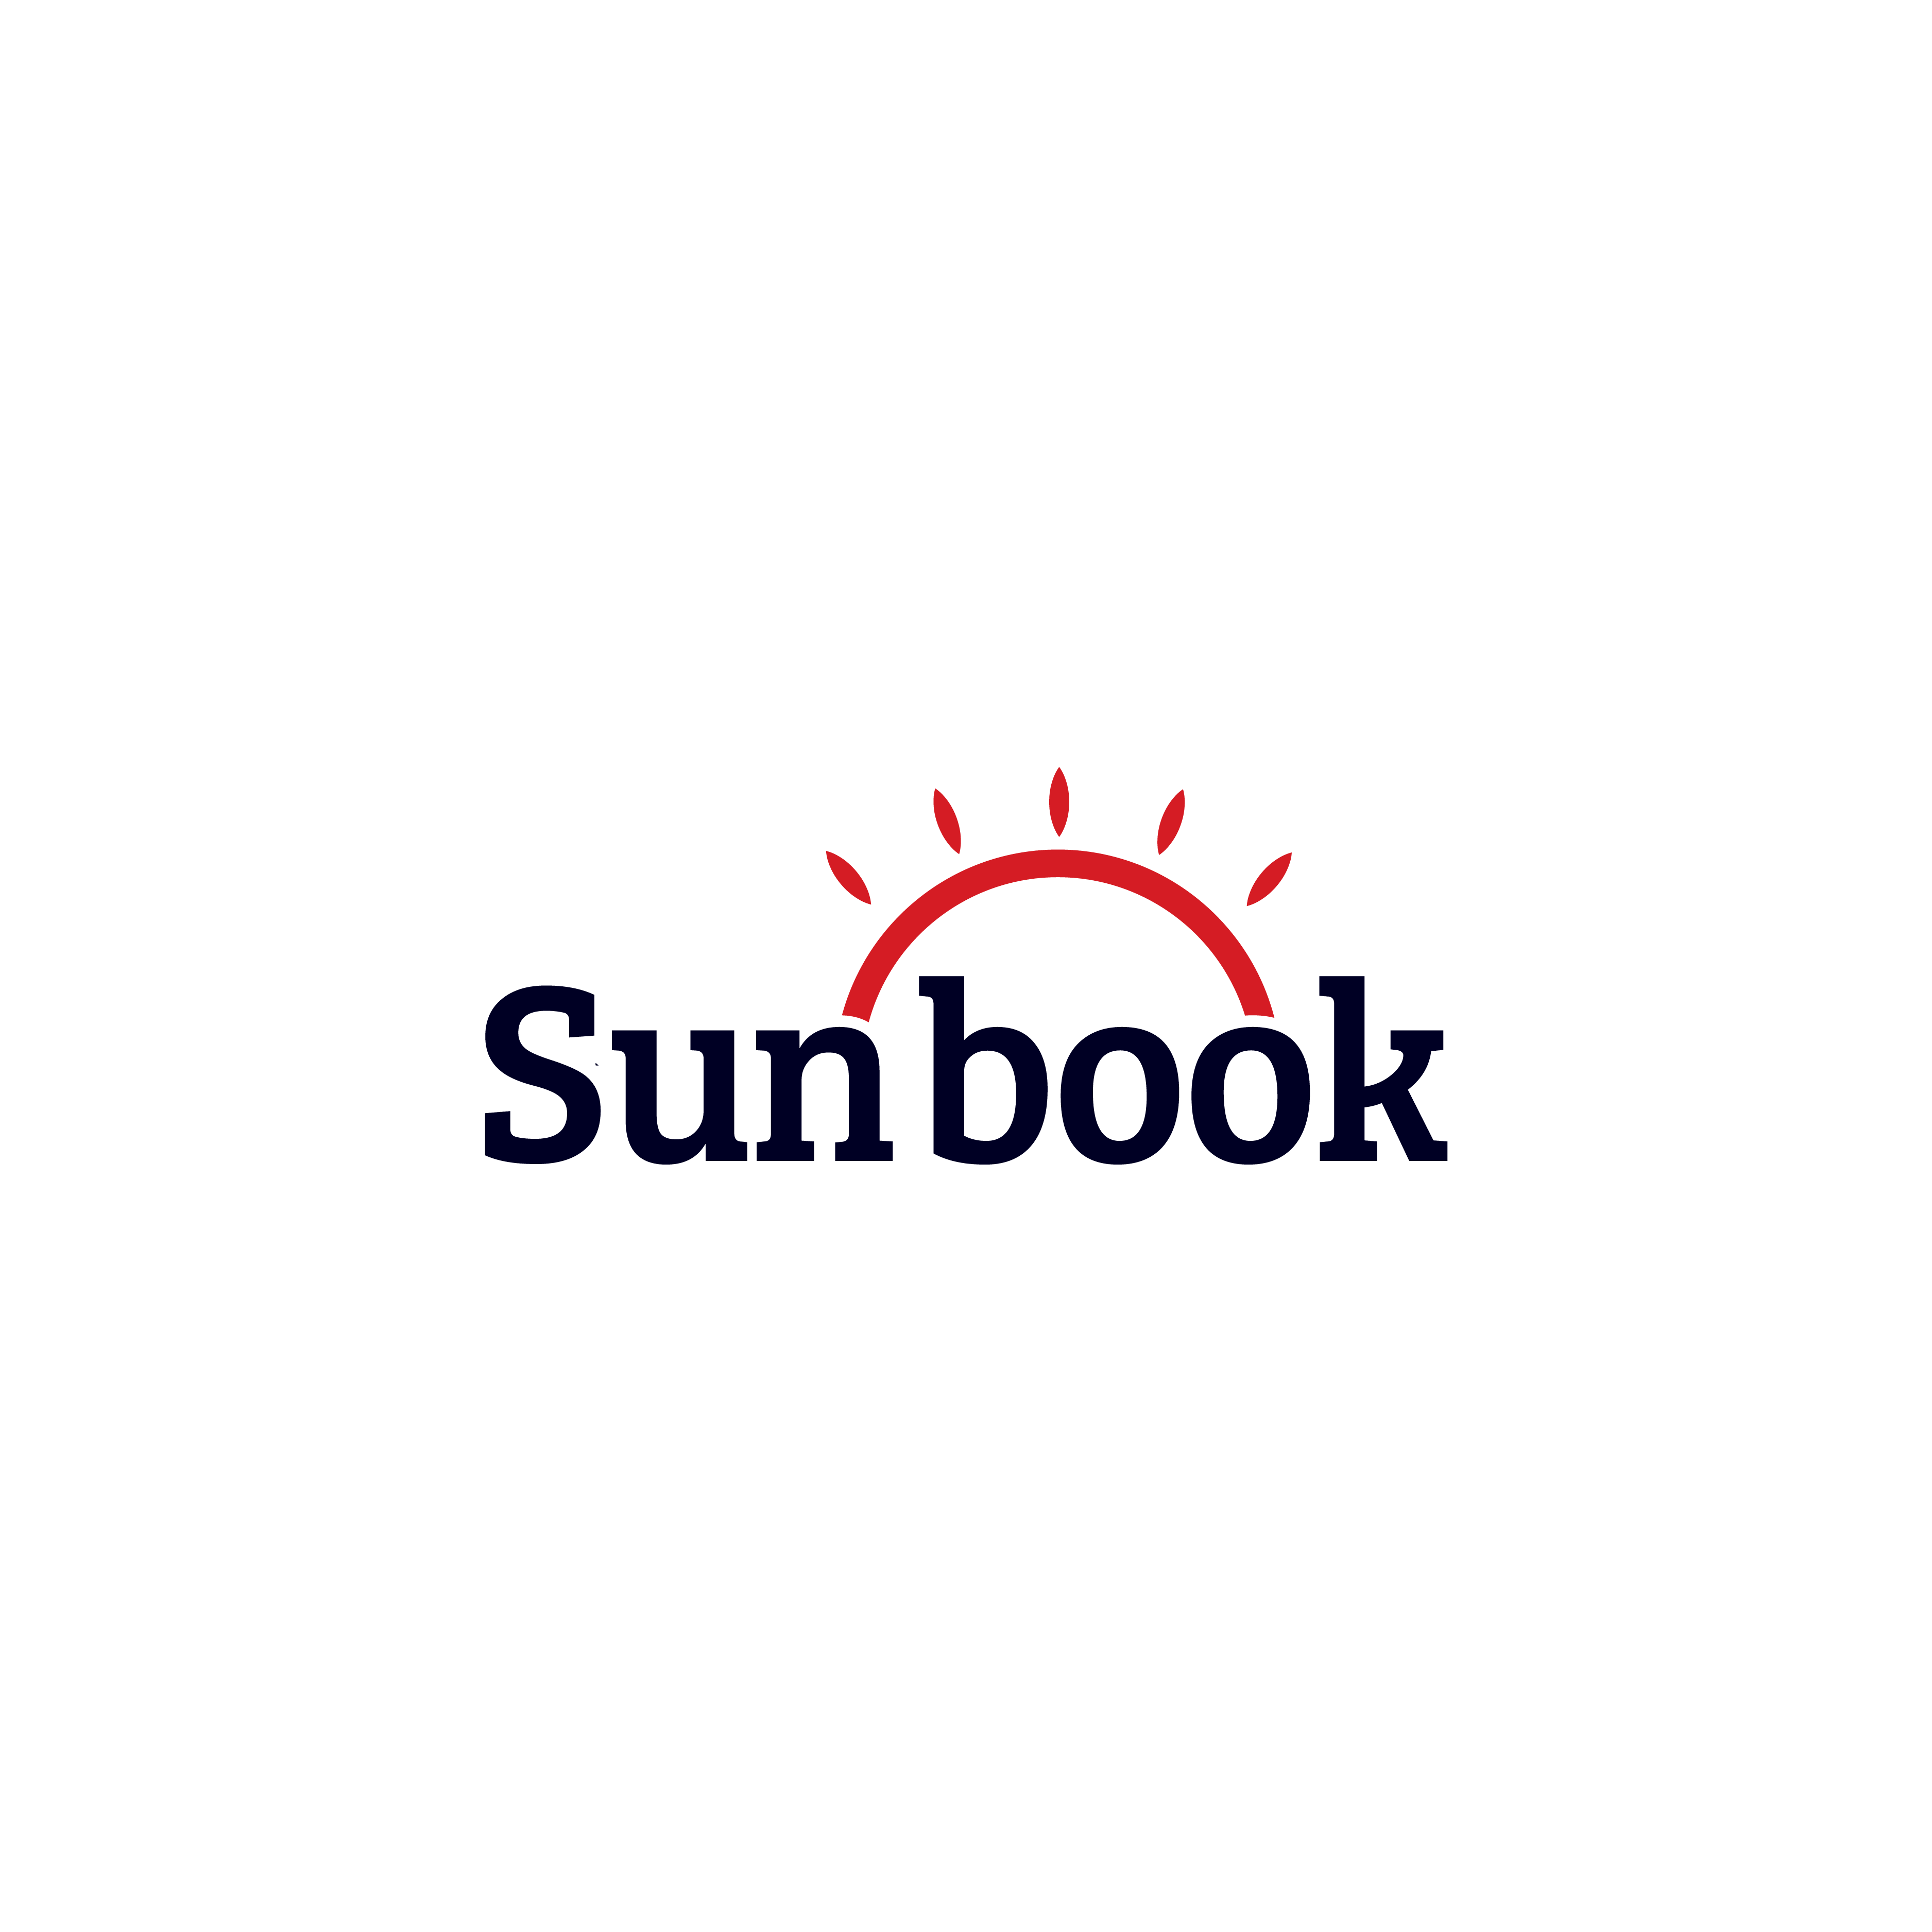 Sunbook Store